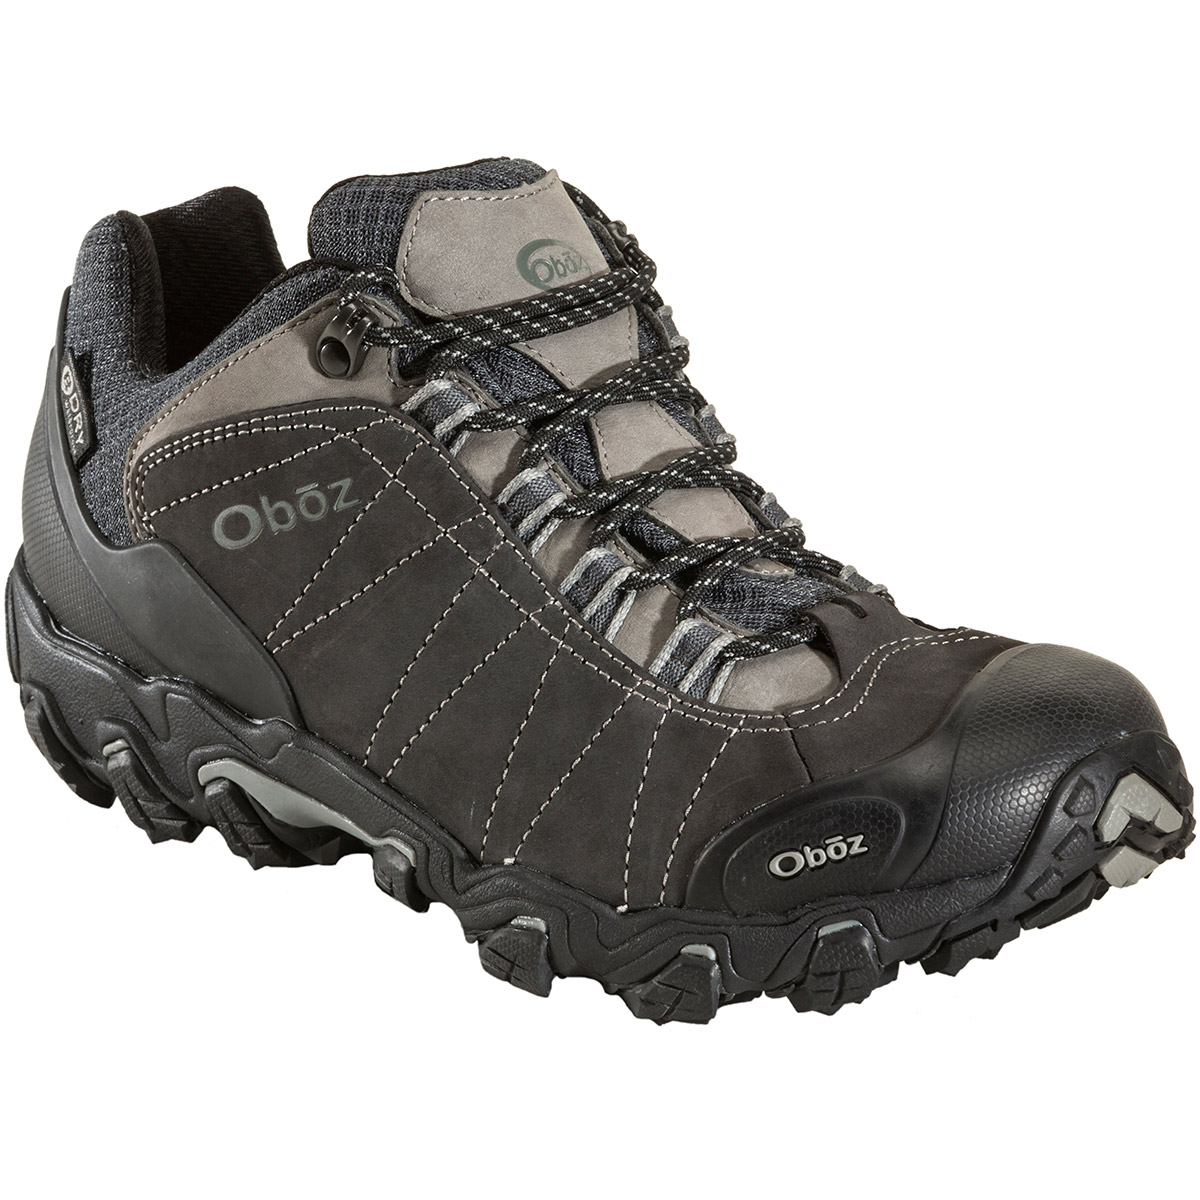 Oboz Men's Bridger Low B-Dry Hiking Shoes - Size 8